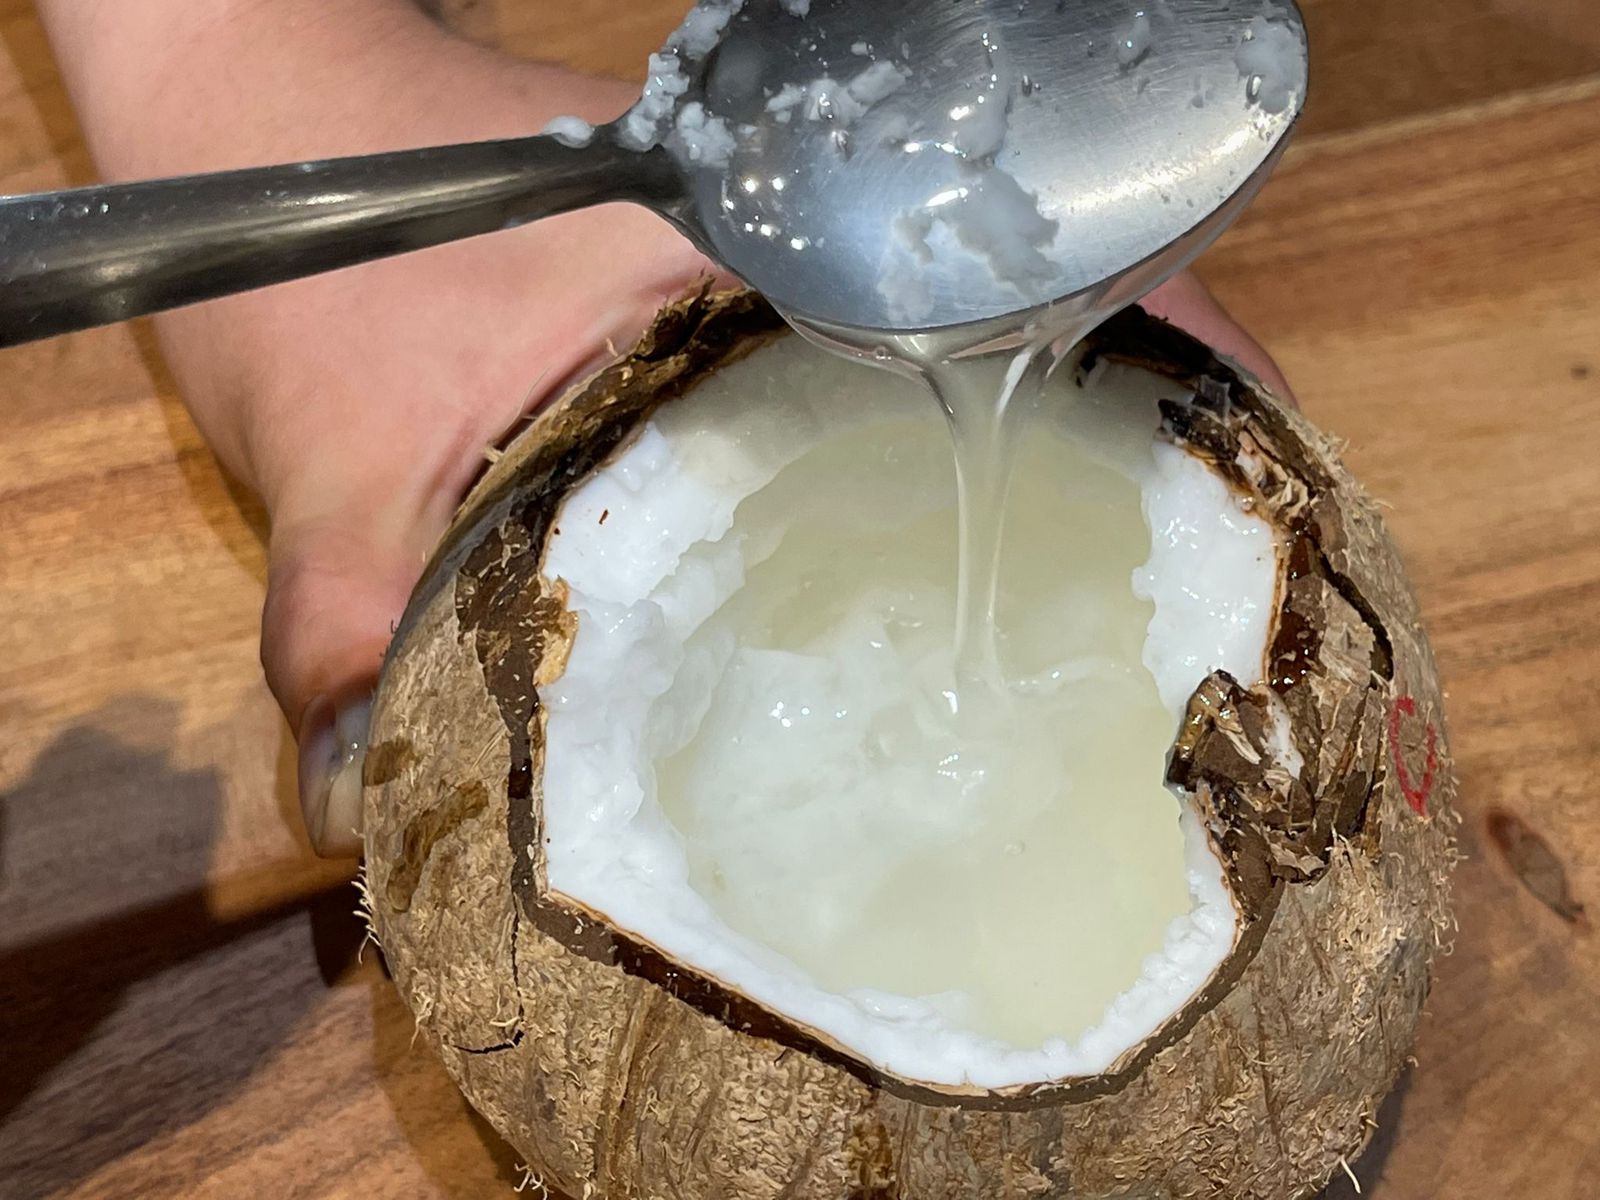 Milky Kokosnuss - Dừa sáp